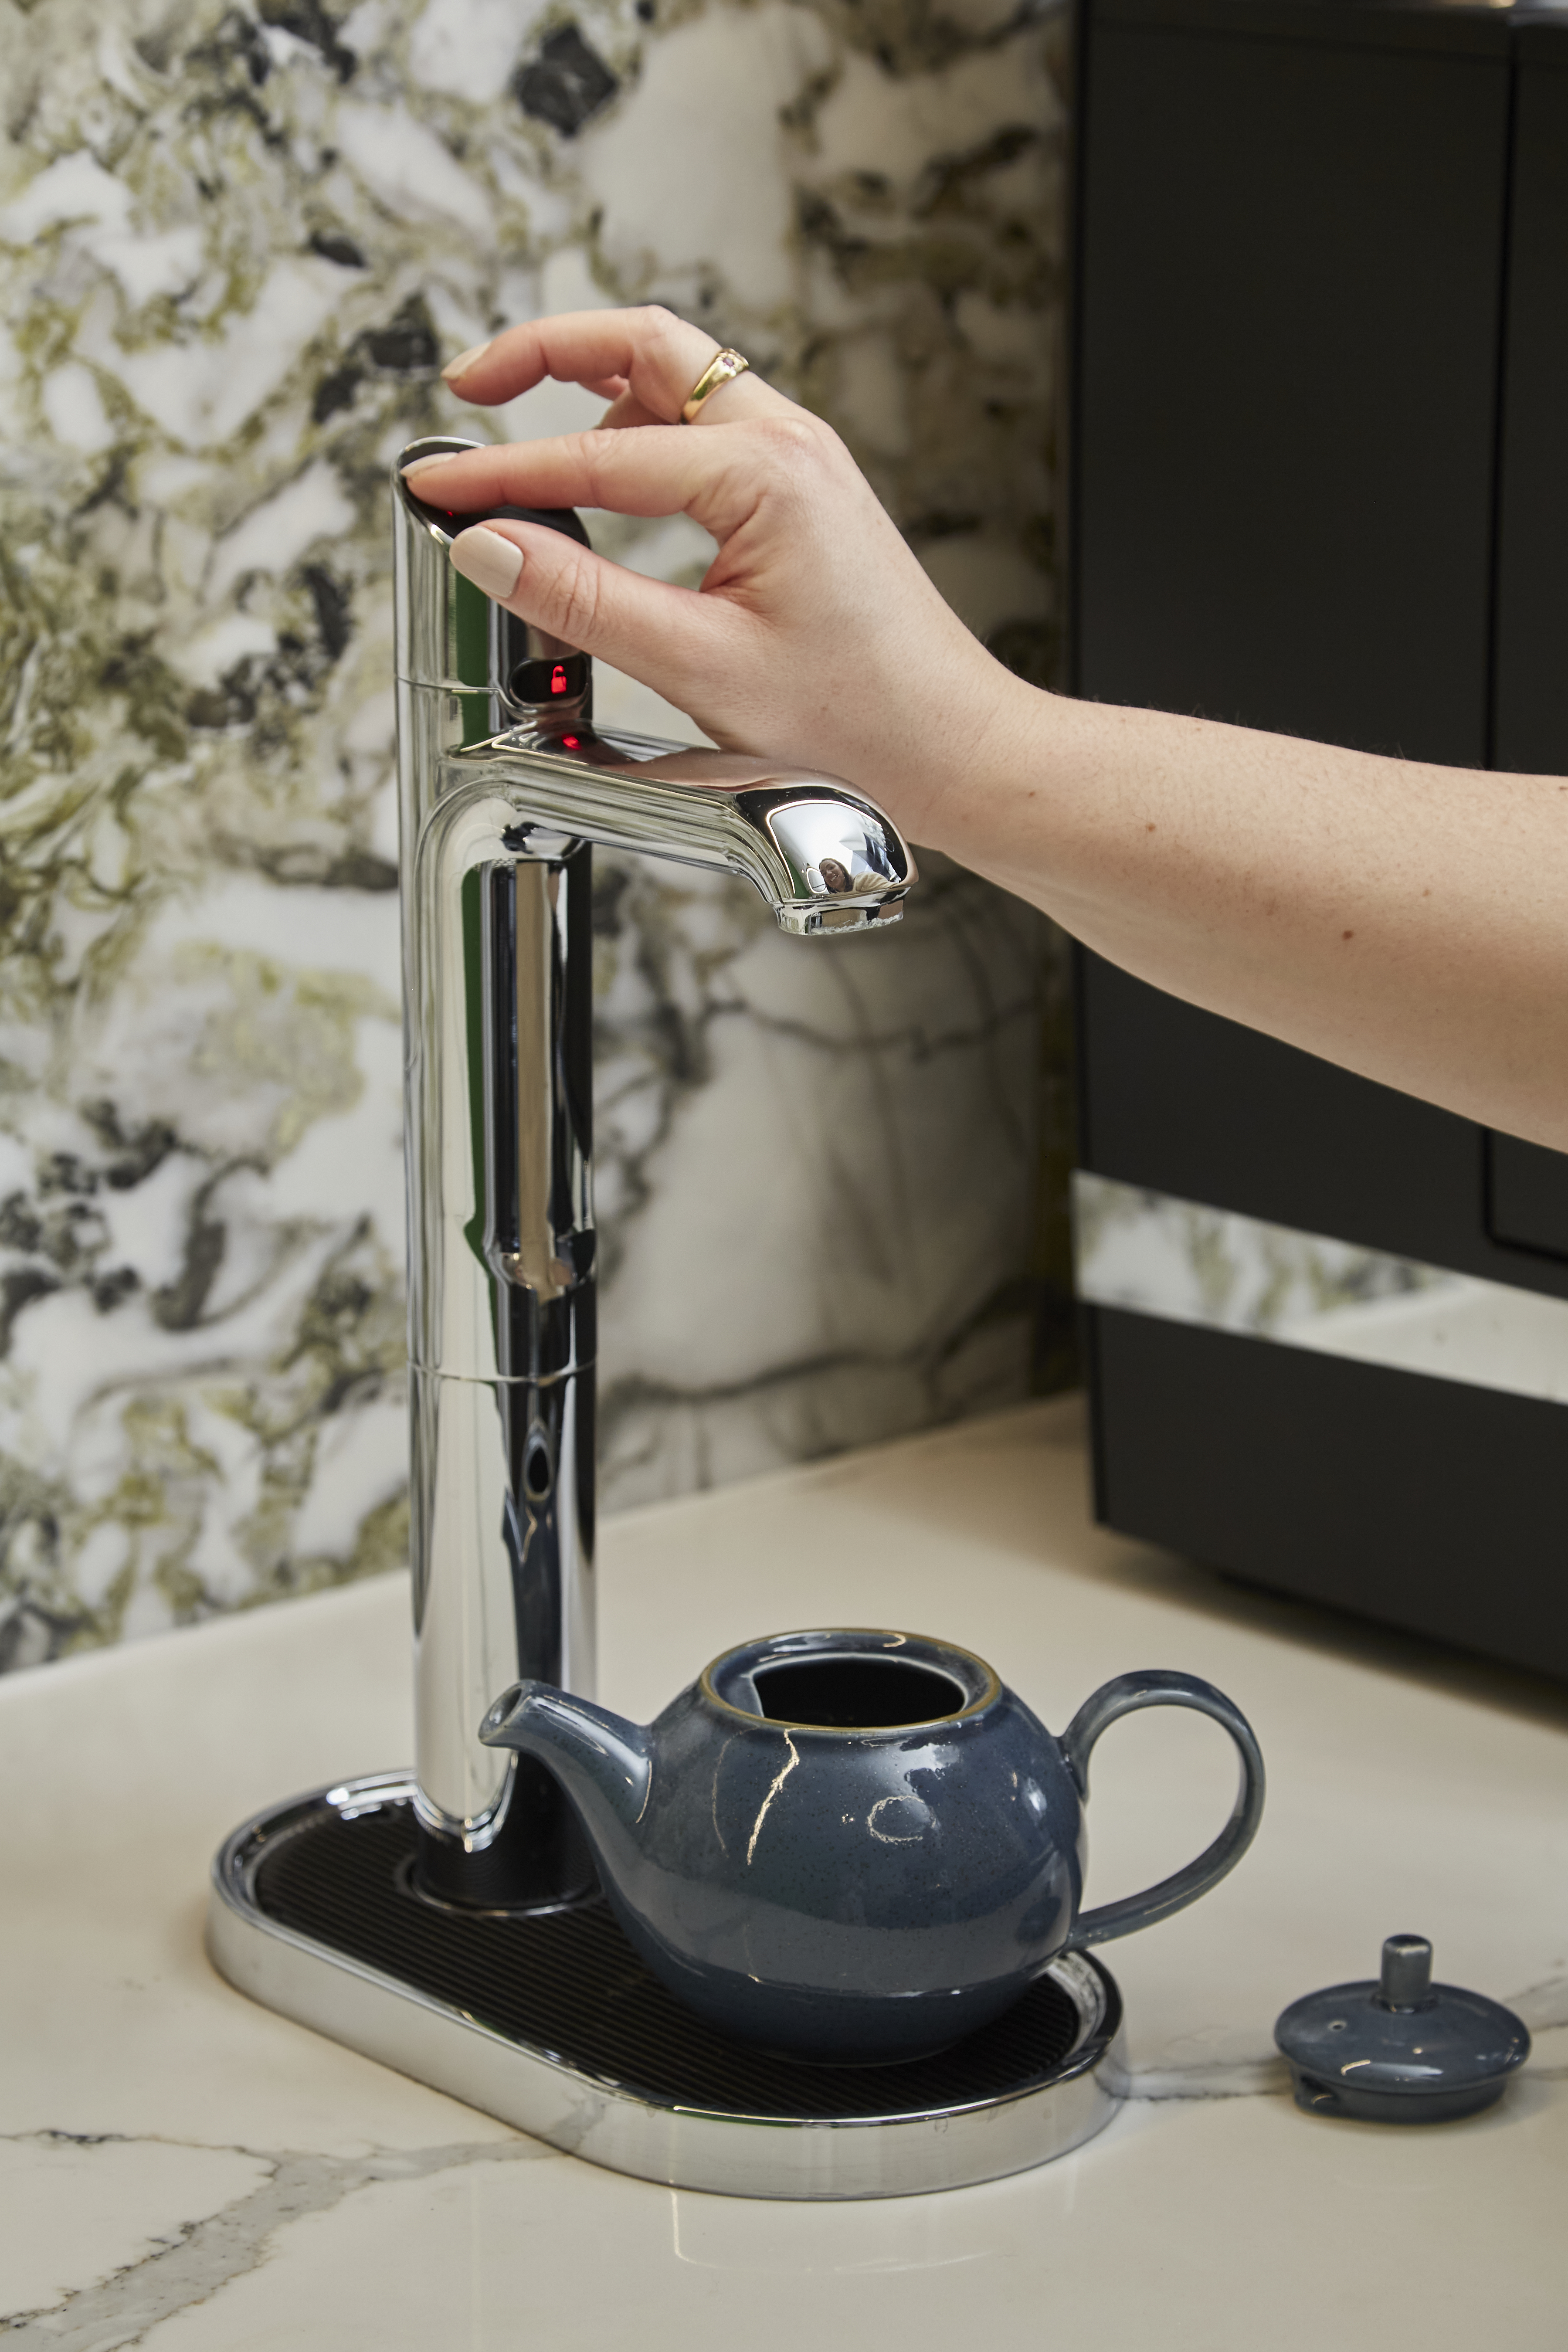 A Zip tap filling a teapot.